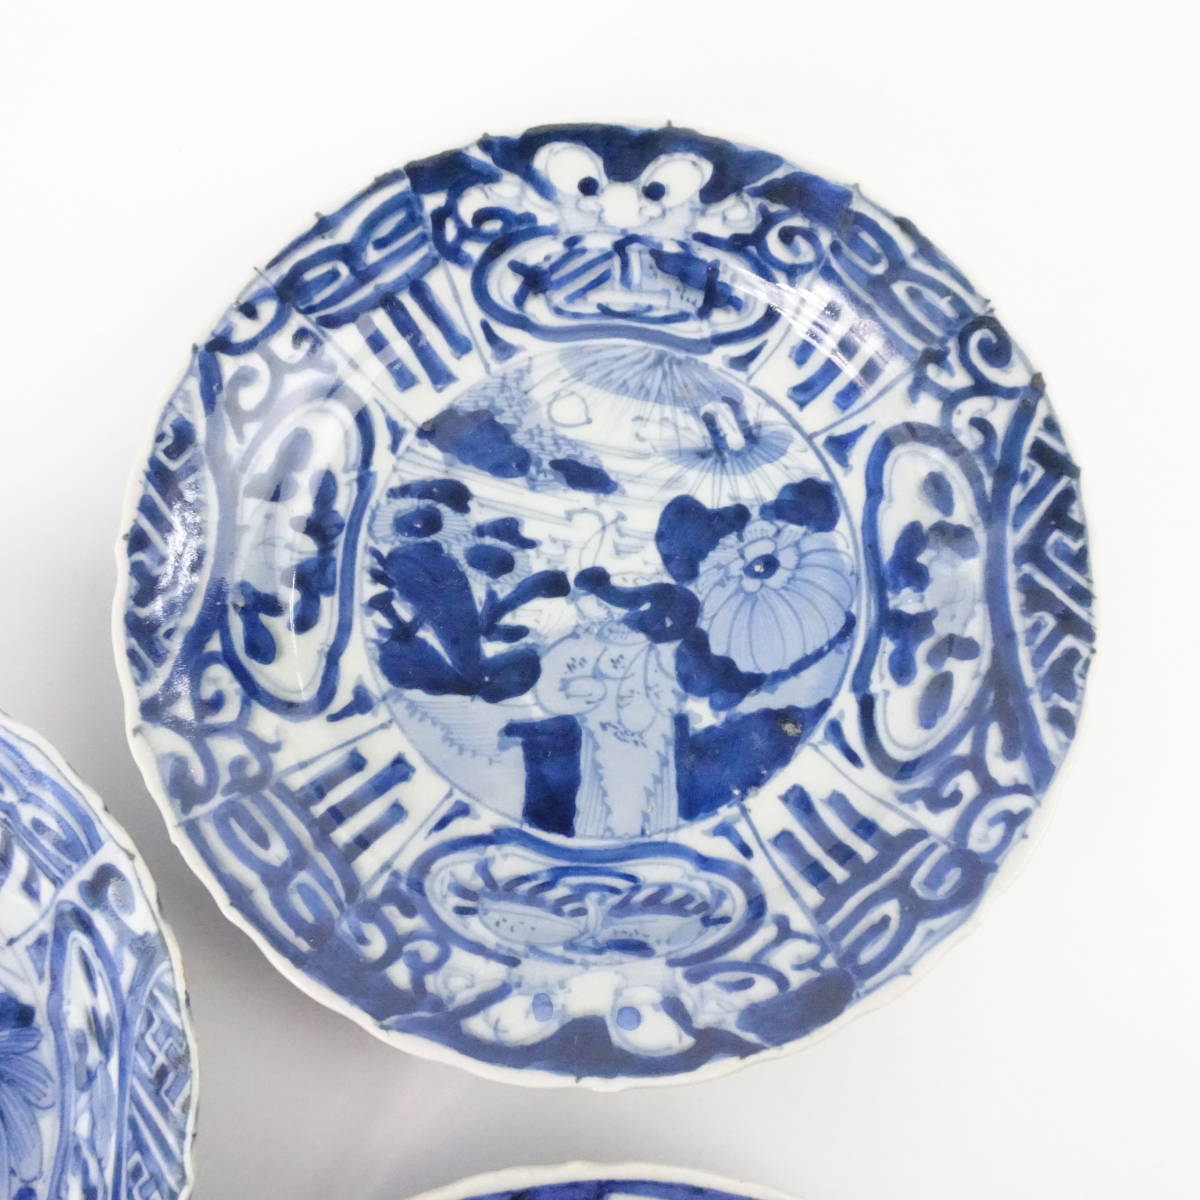  old blue and white ceramics plate . customer .. hand diameter 18cm element .. Seto blue and white ceramics era thing 